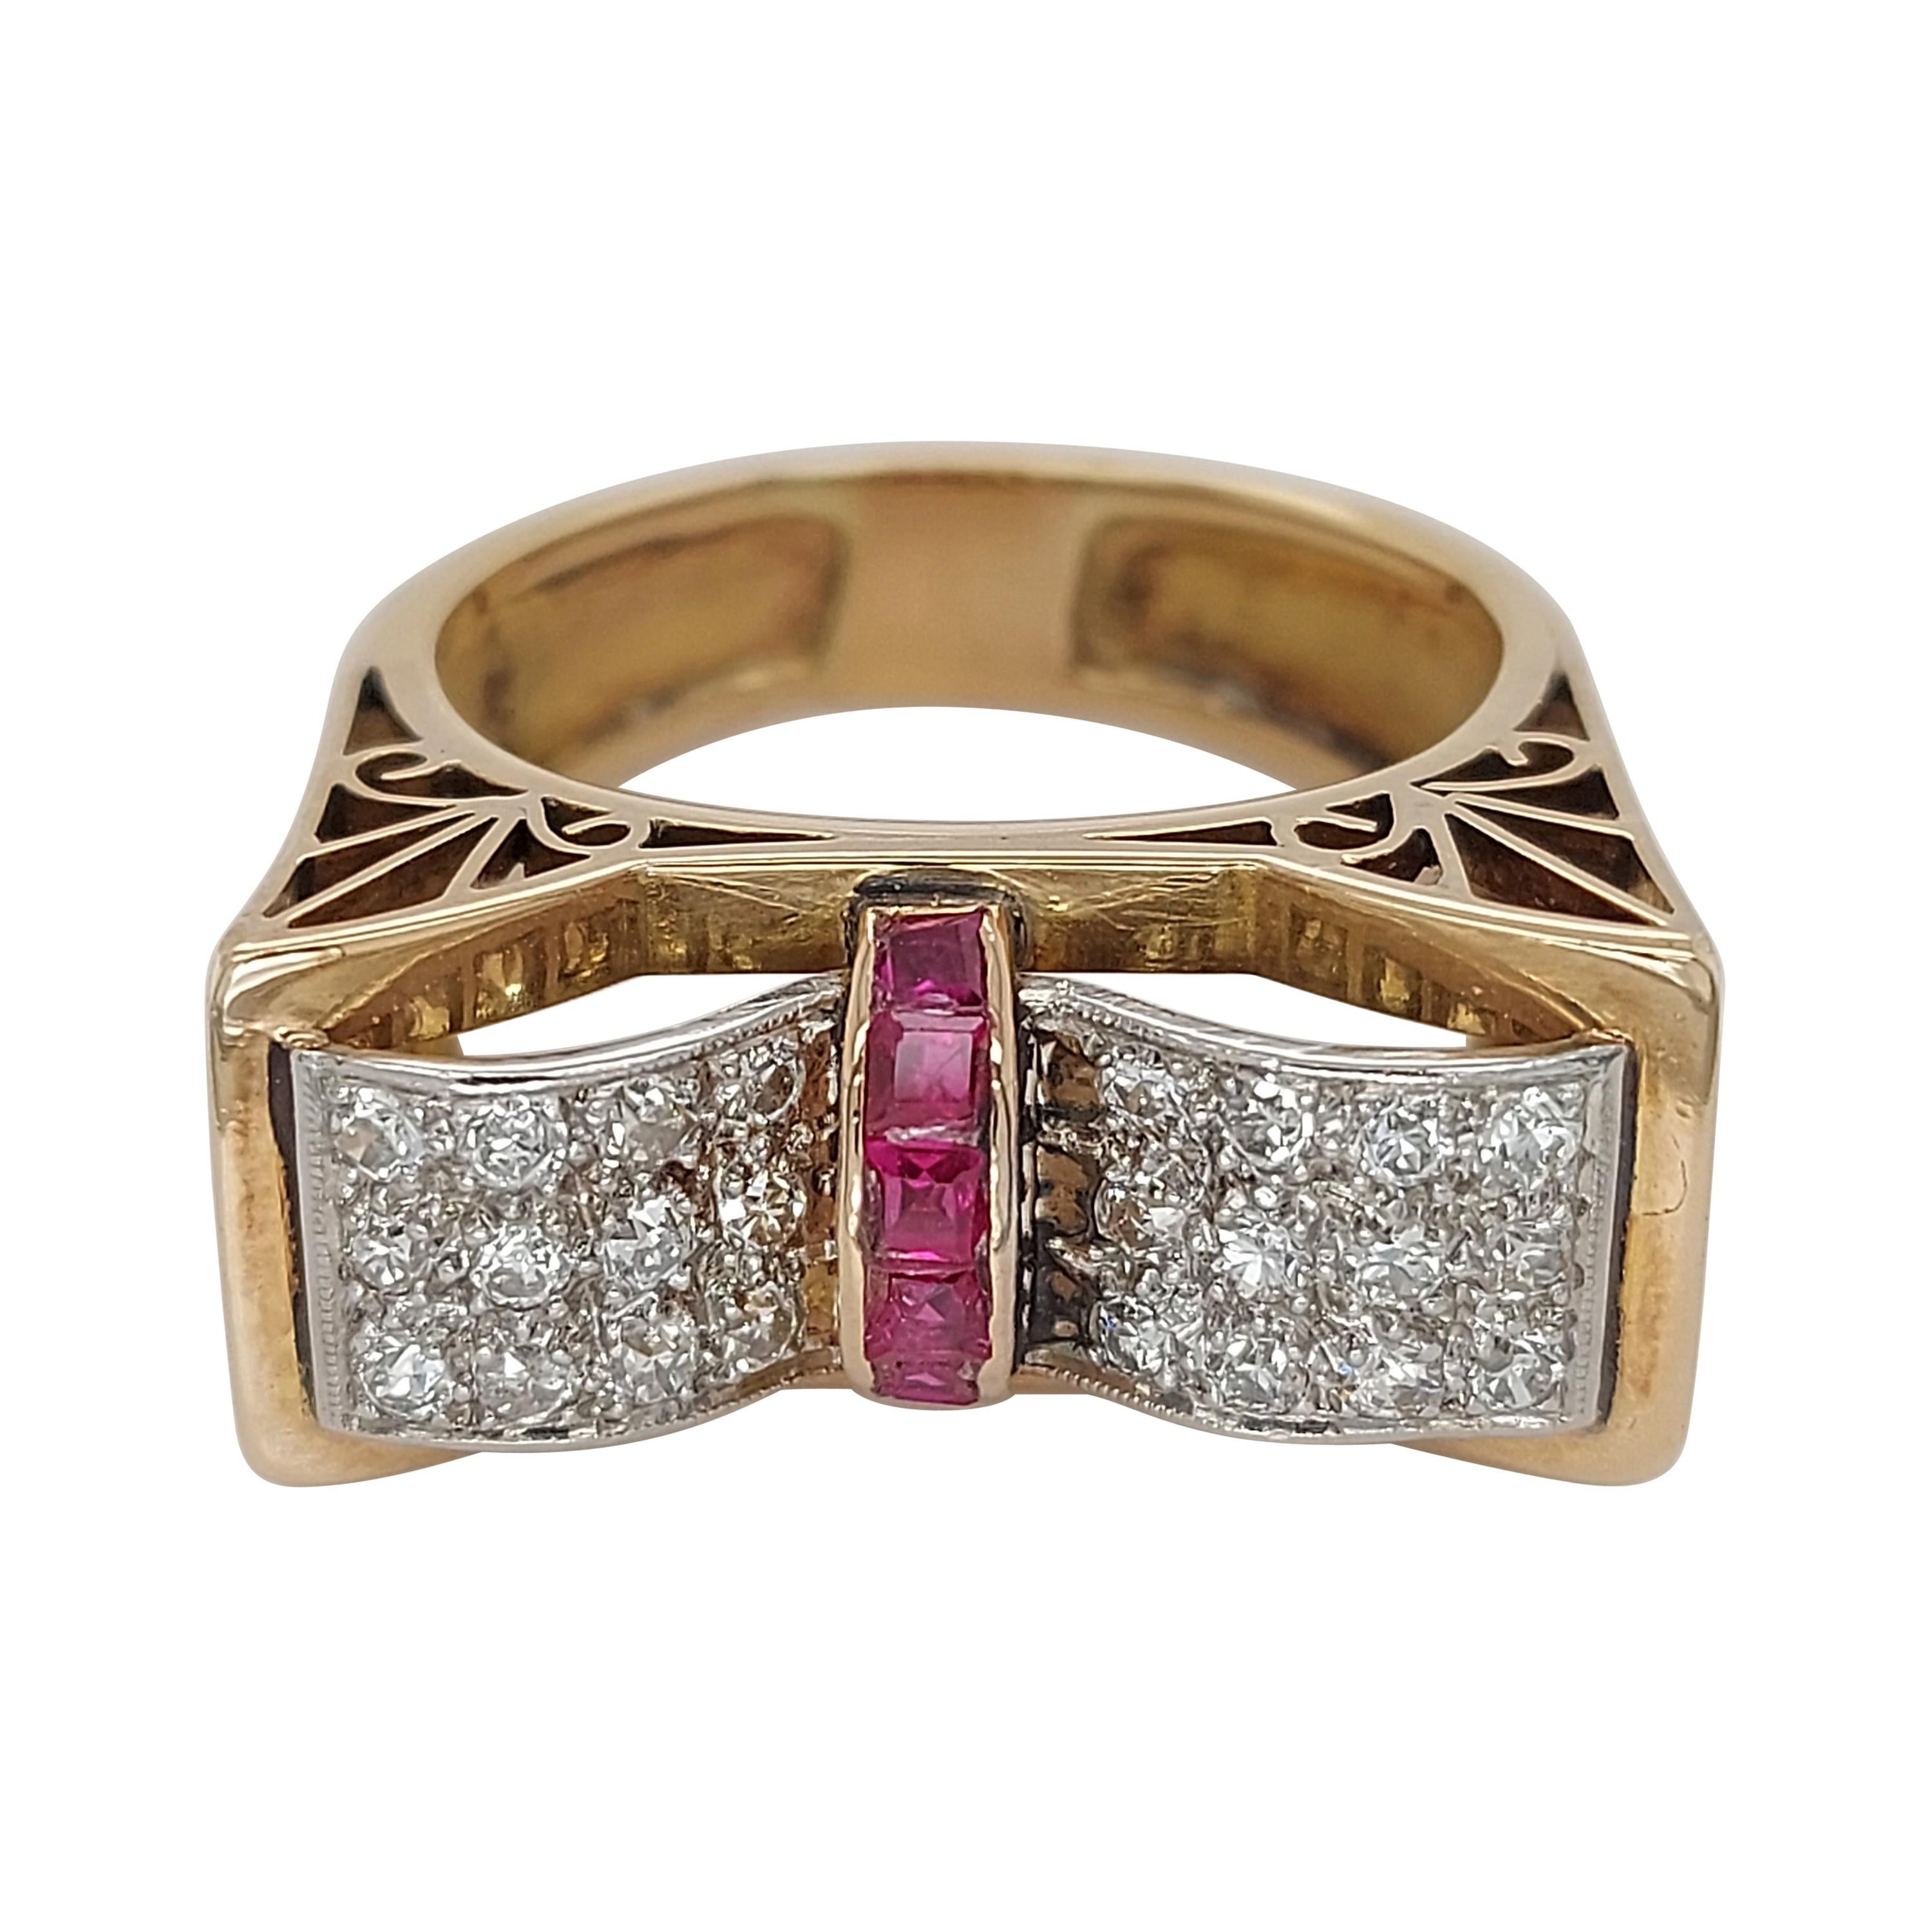 18kt BI Colour Gold Vintage 1940' Ring with Ruby's & 1ct Brilliant Cut Diamonds